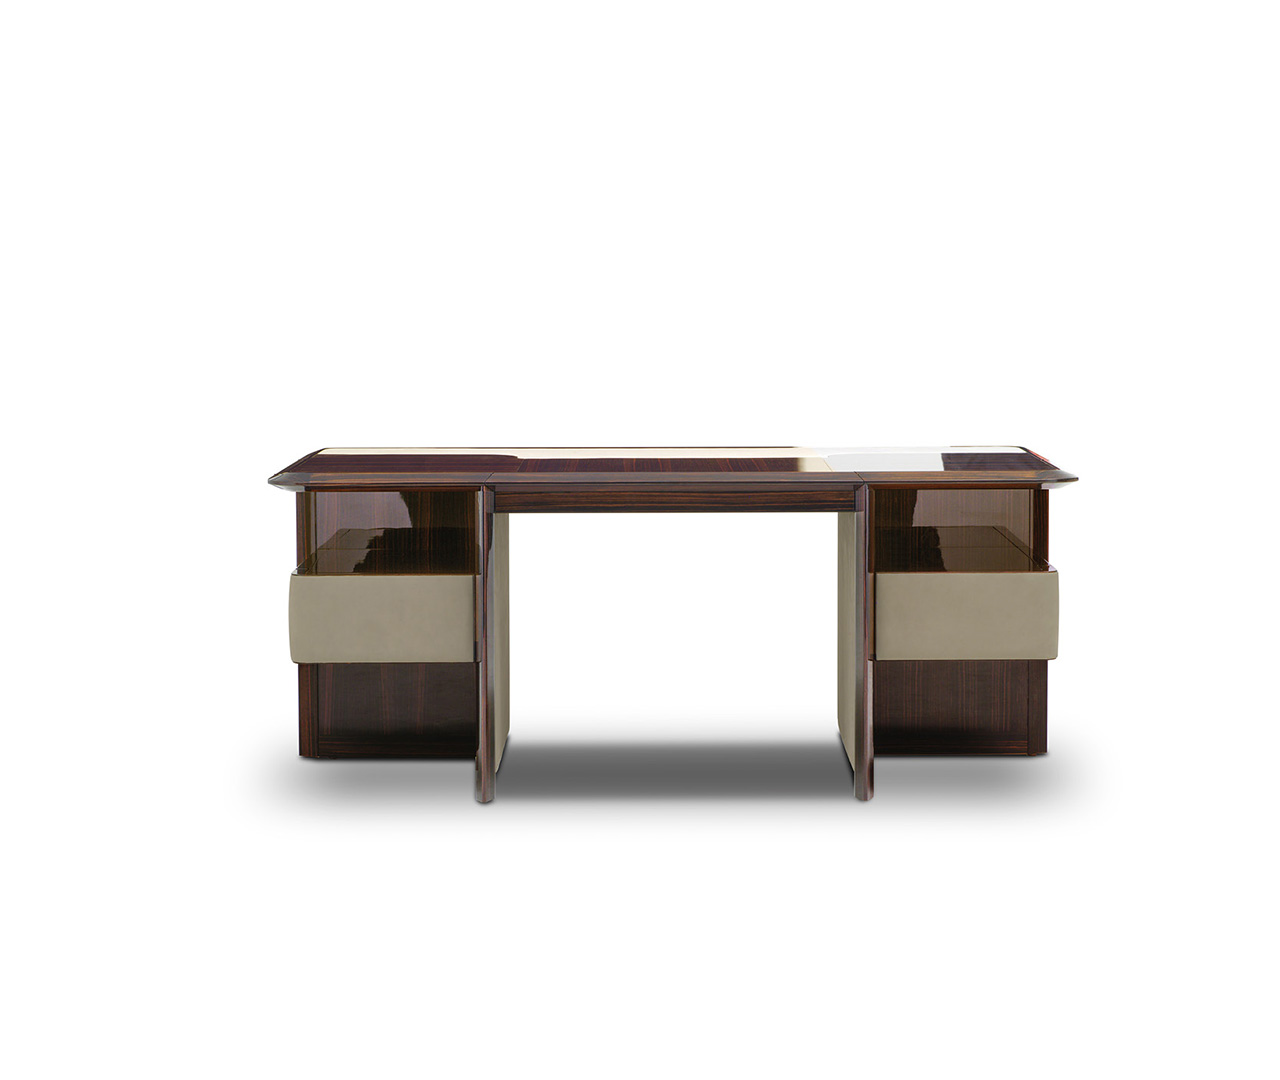 The Brown Glossy Wood Modern Desk